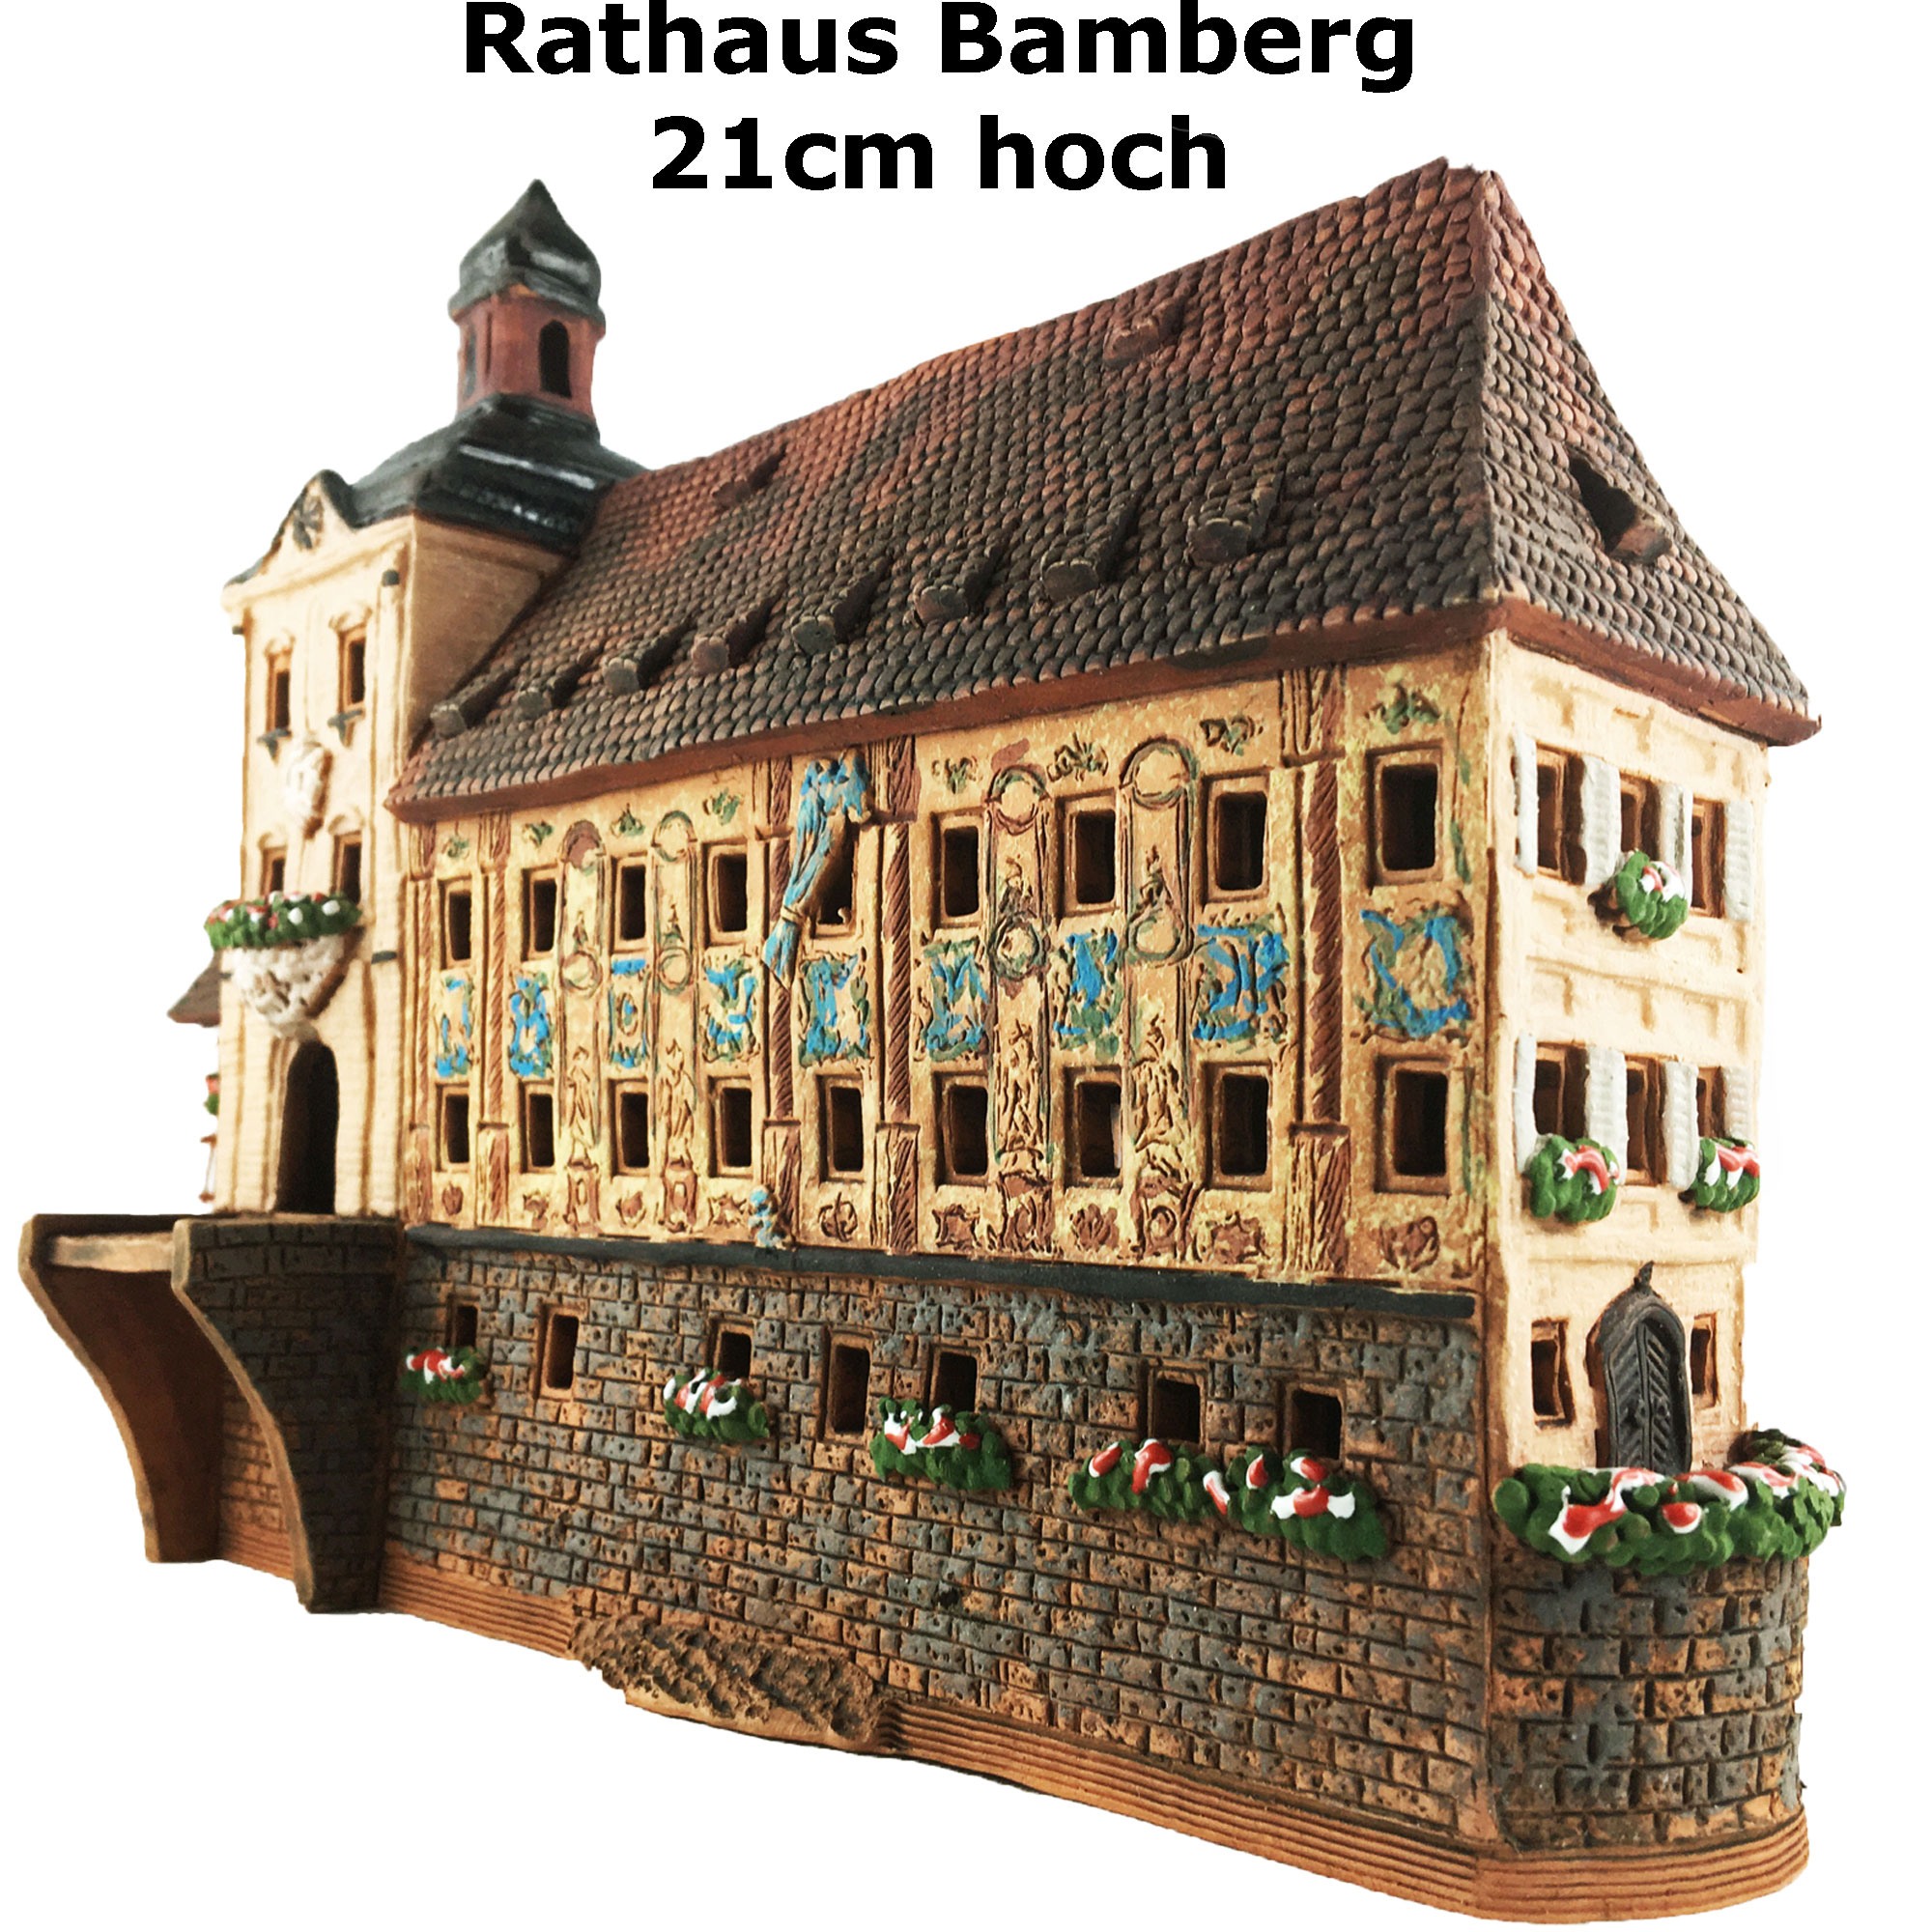 Rathaus Bamberg ceramic miniature 21cm hoch